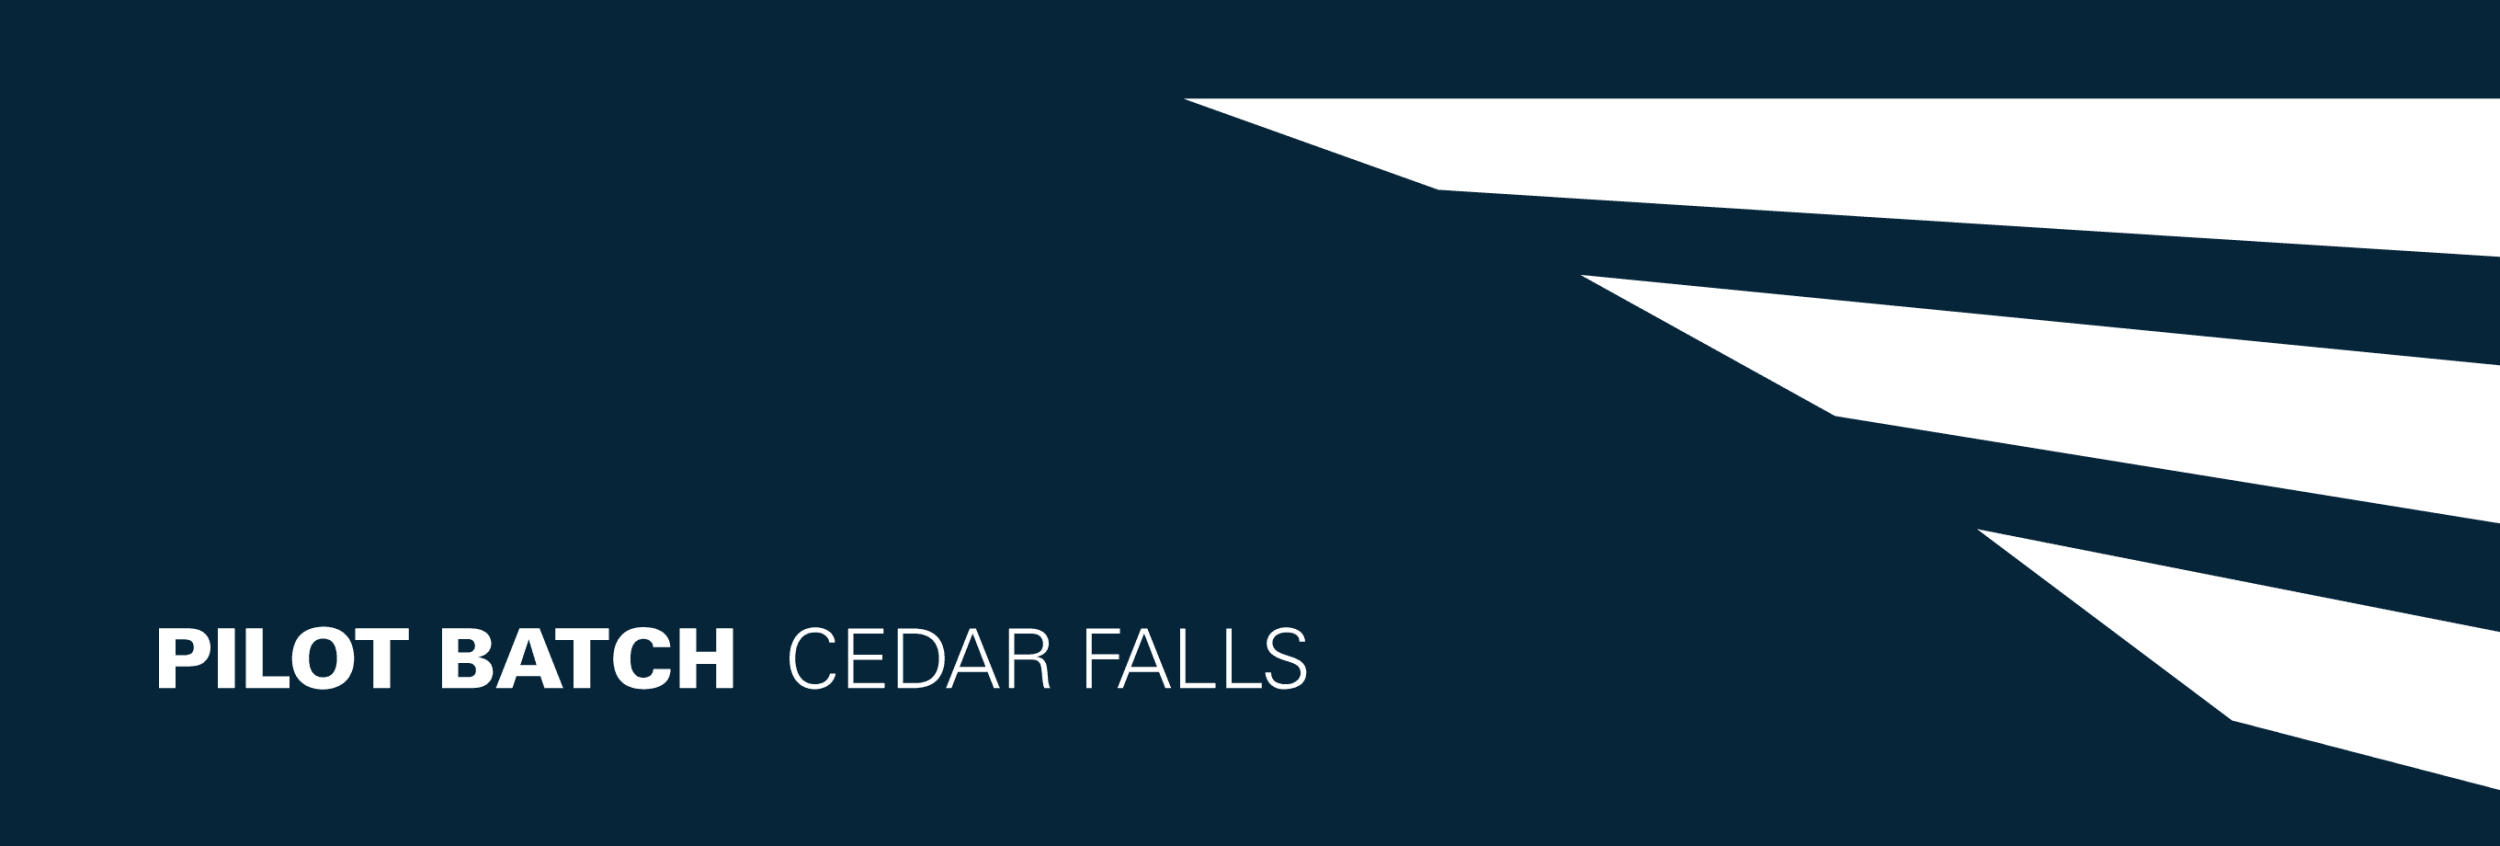 Pilot Batch - Cedar Falls